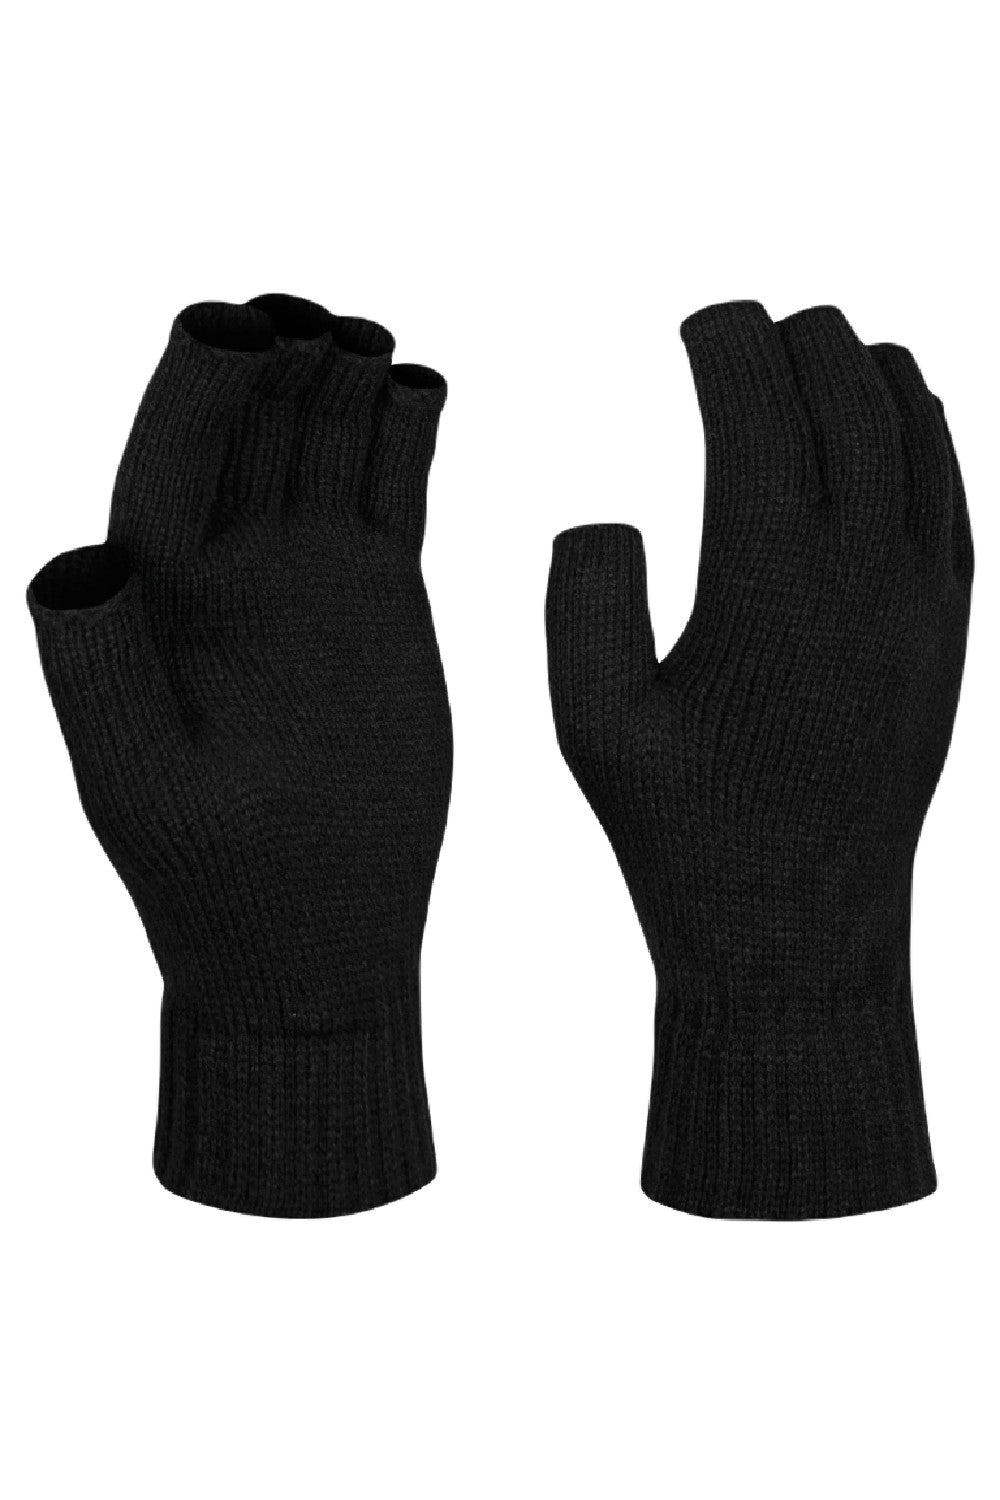 Regatta Thermal Fingerless Mitts in Black